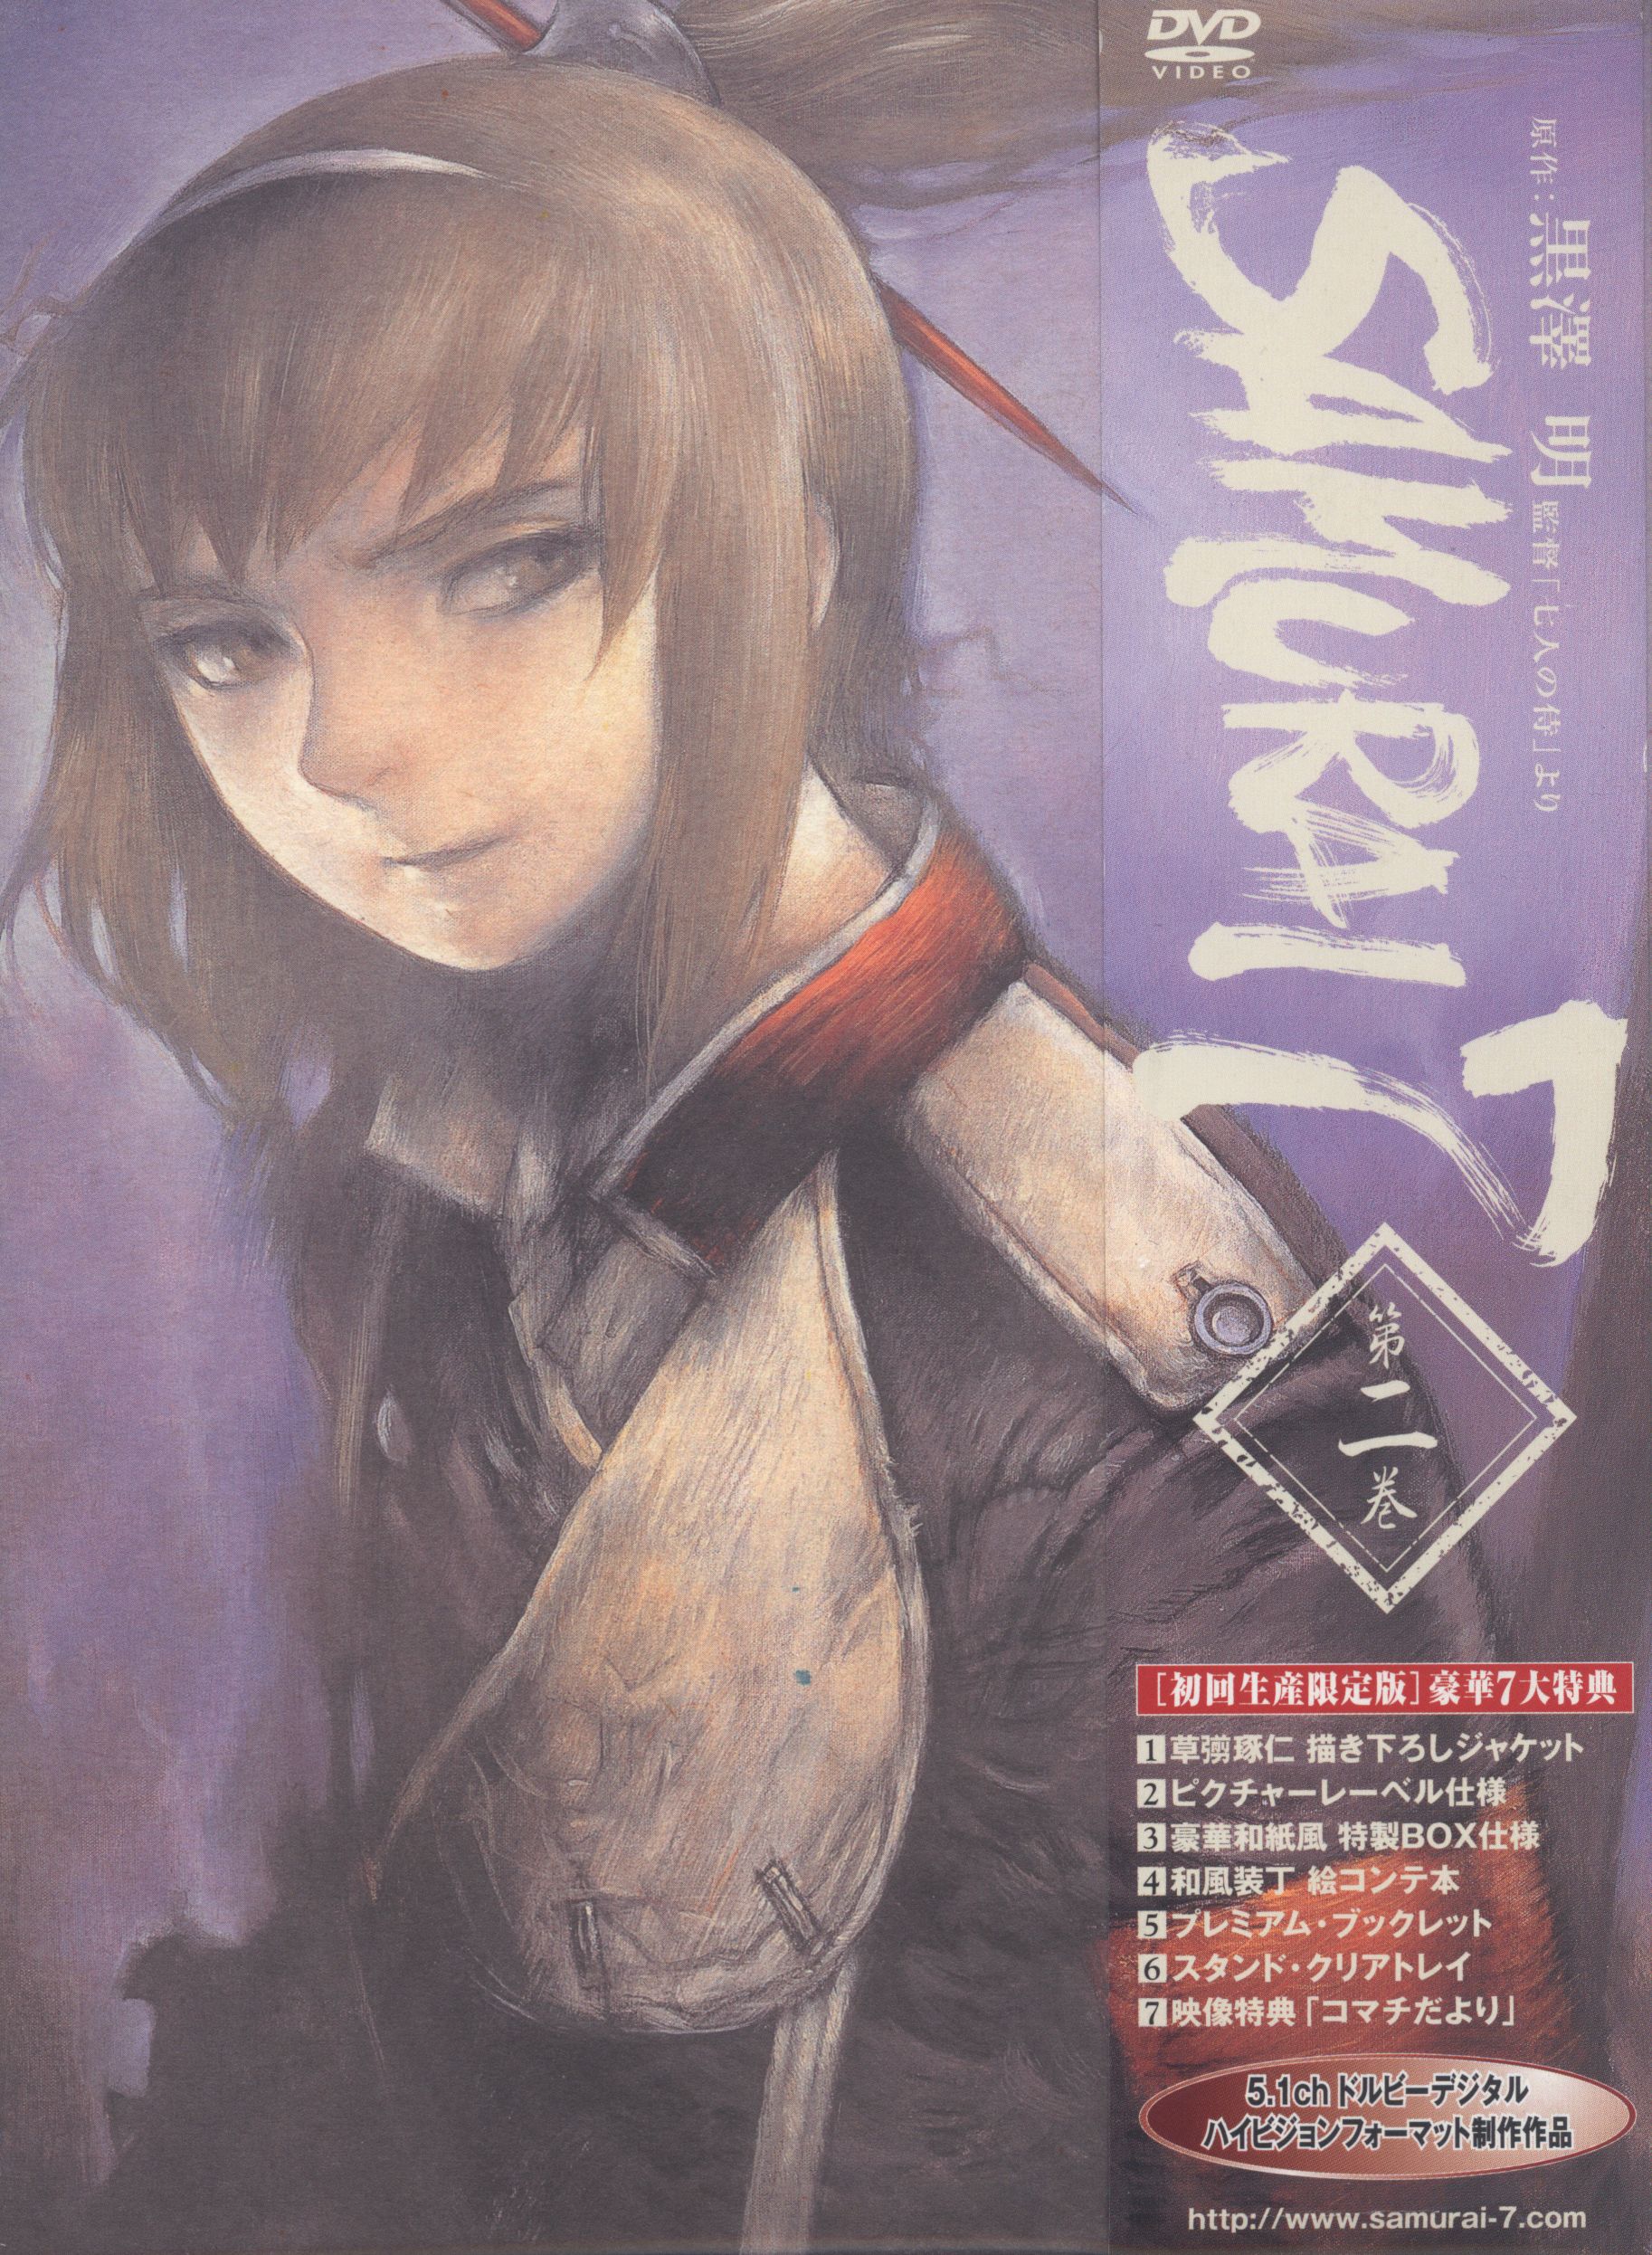 Anime Dvd Samurai 7 Second Volume First Edition Mandarake 在线商店